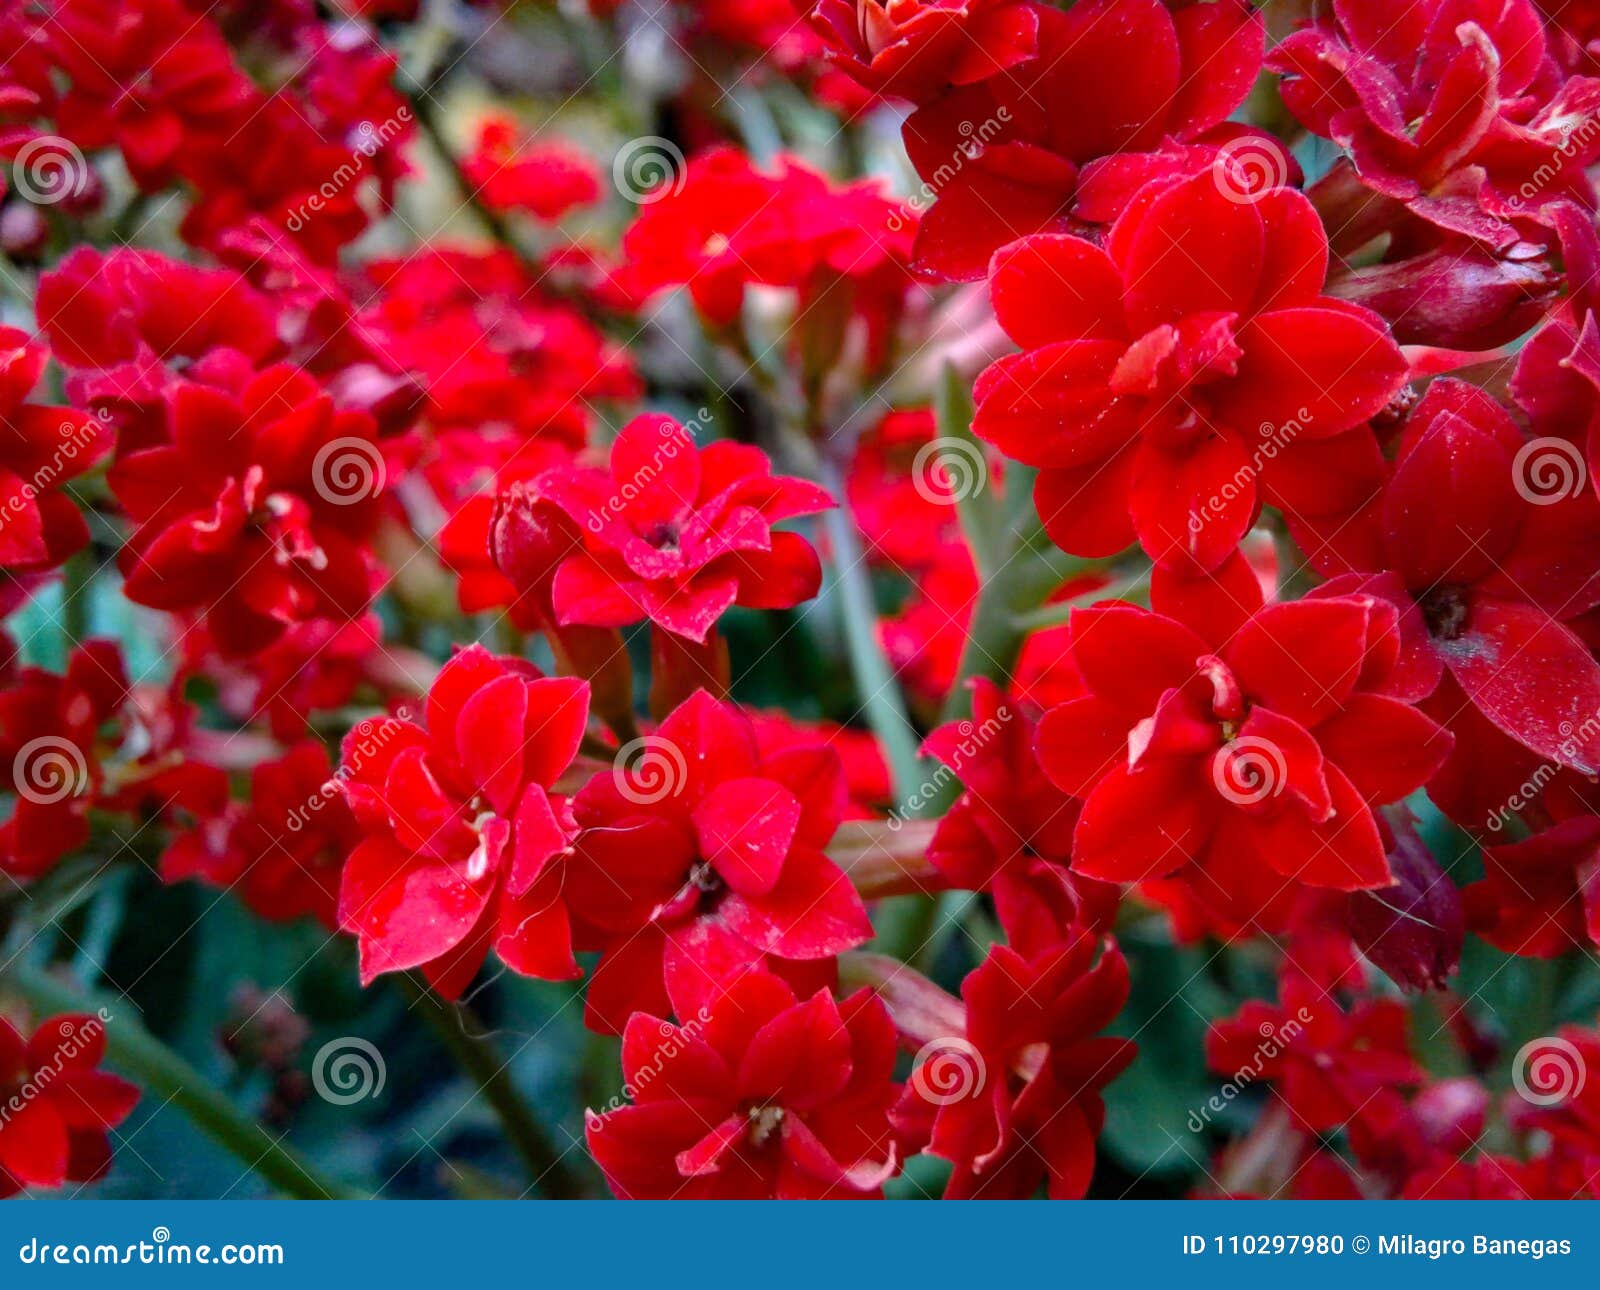 flowers red kalanchoe blossfeldiana pÃÂ¶llnitz